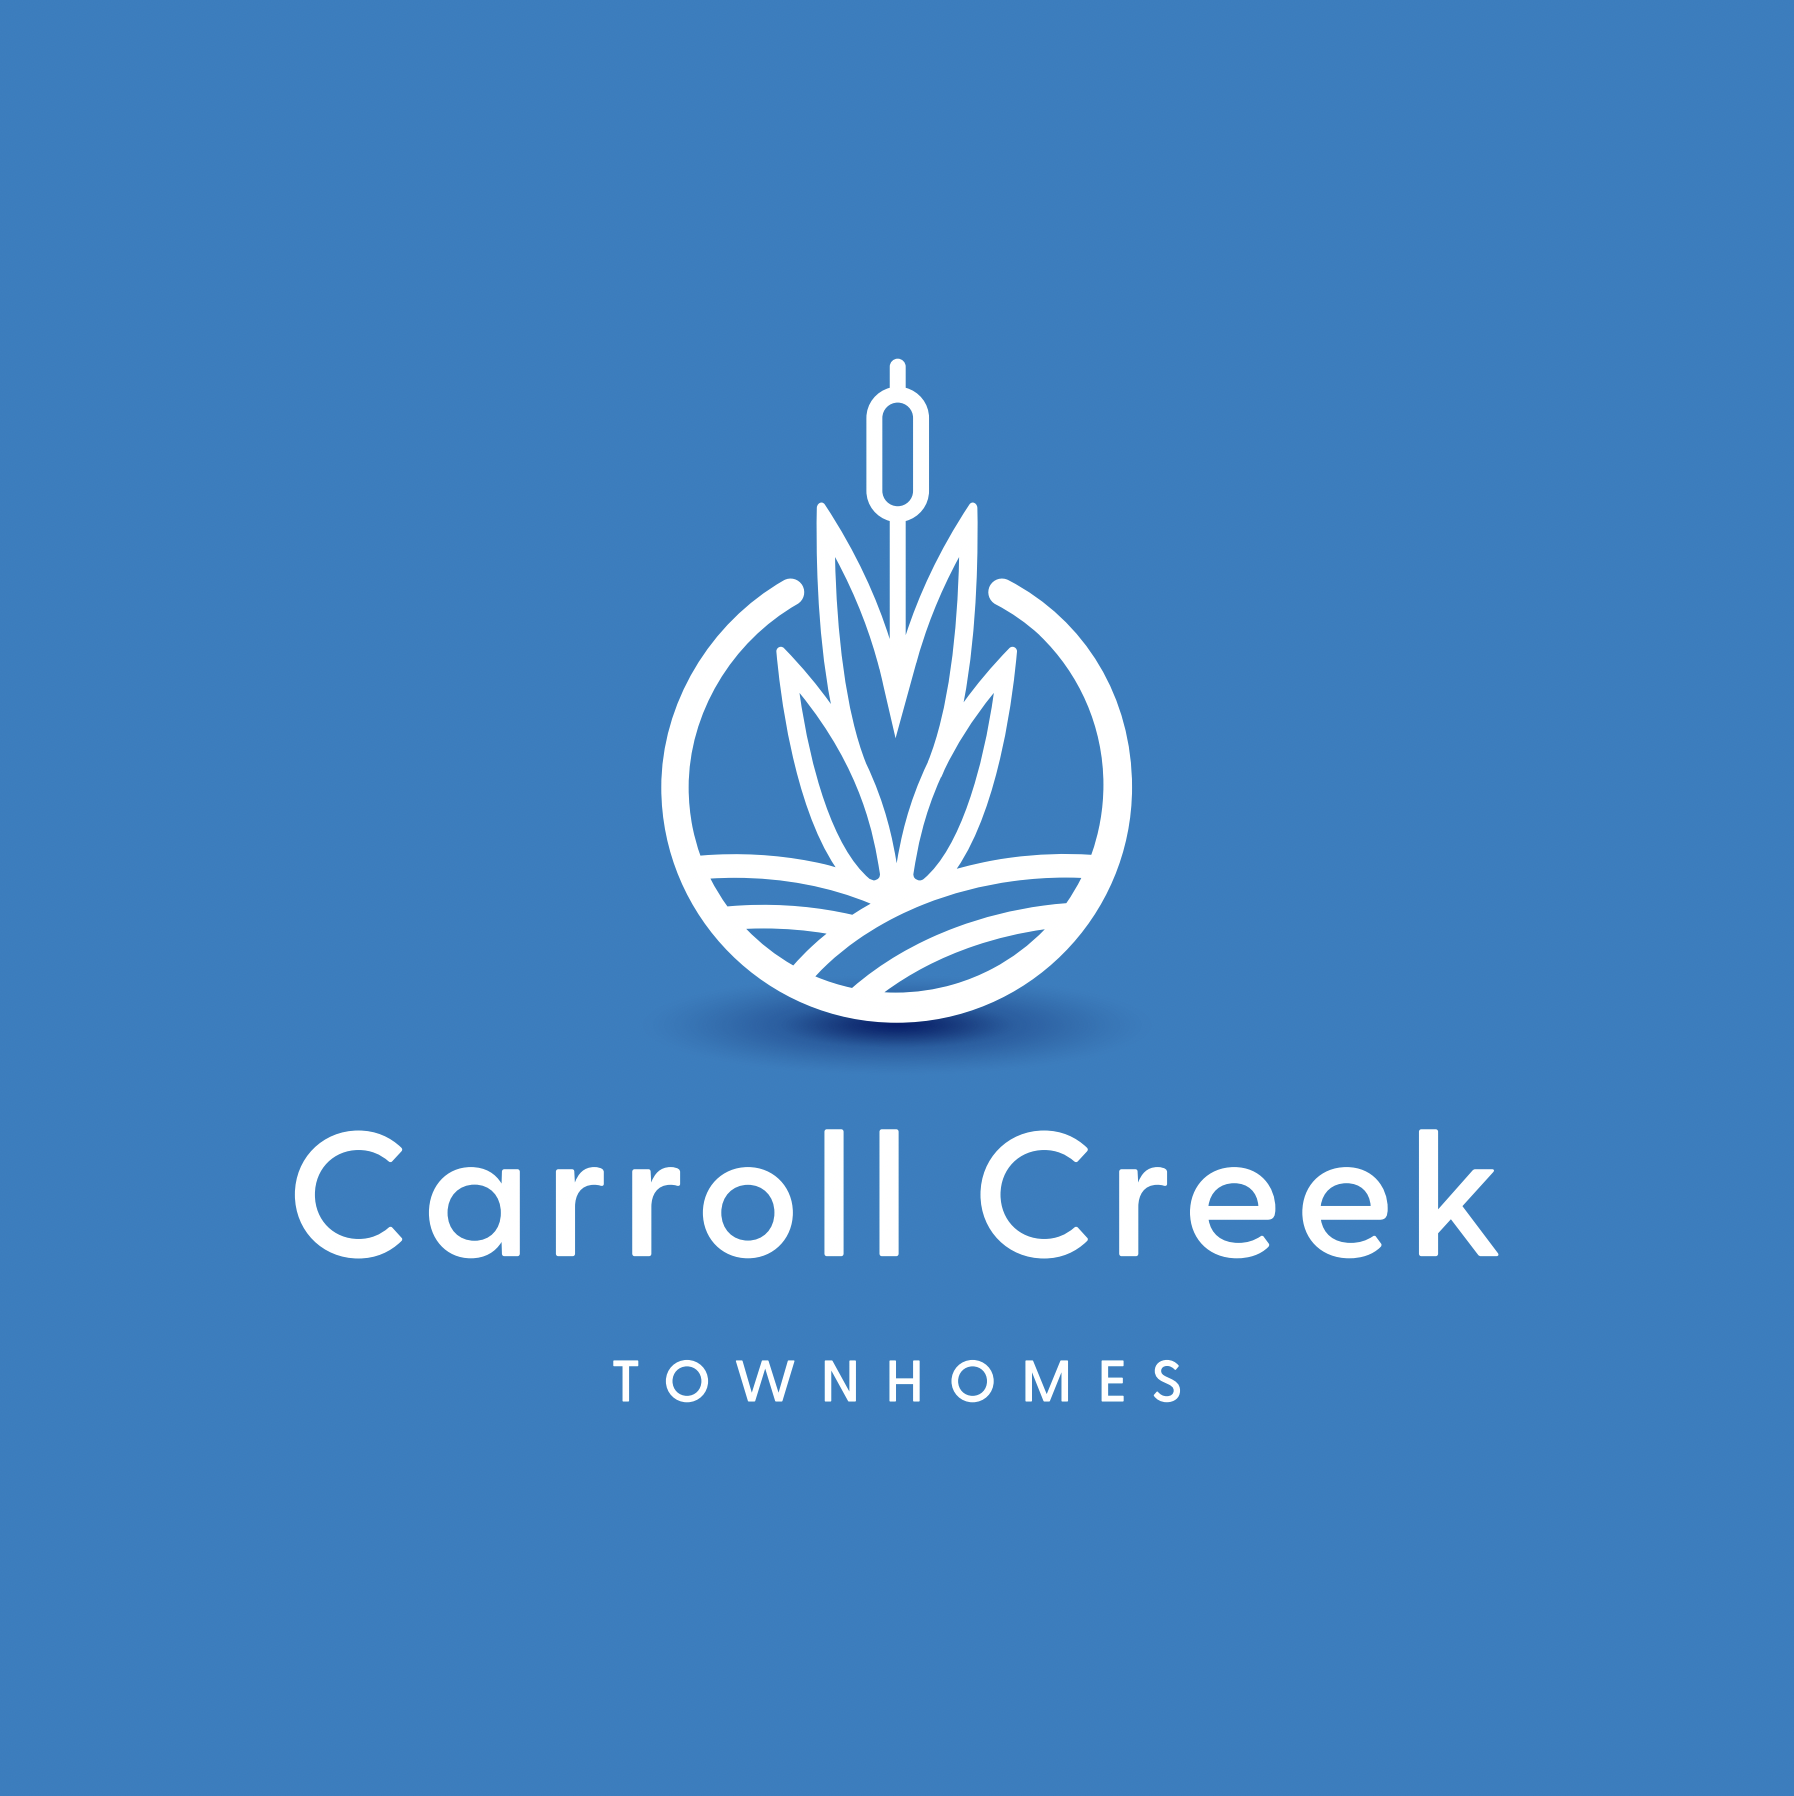 Carroll Creek Towns